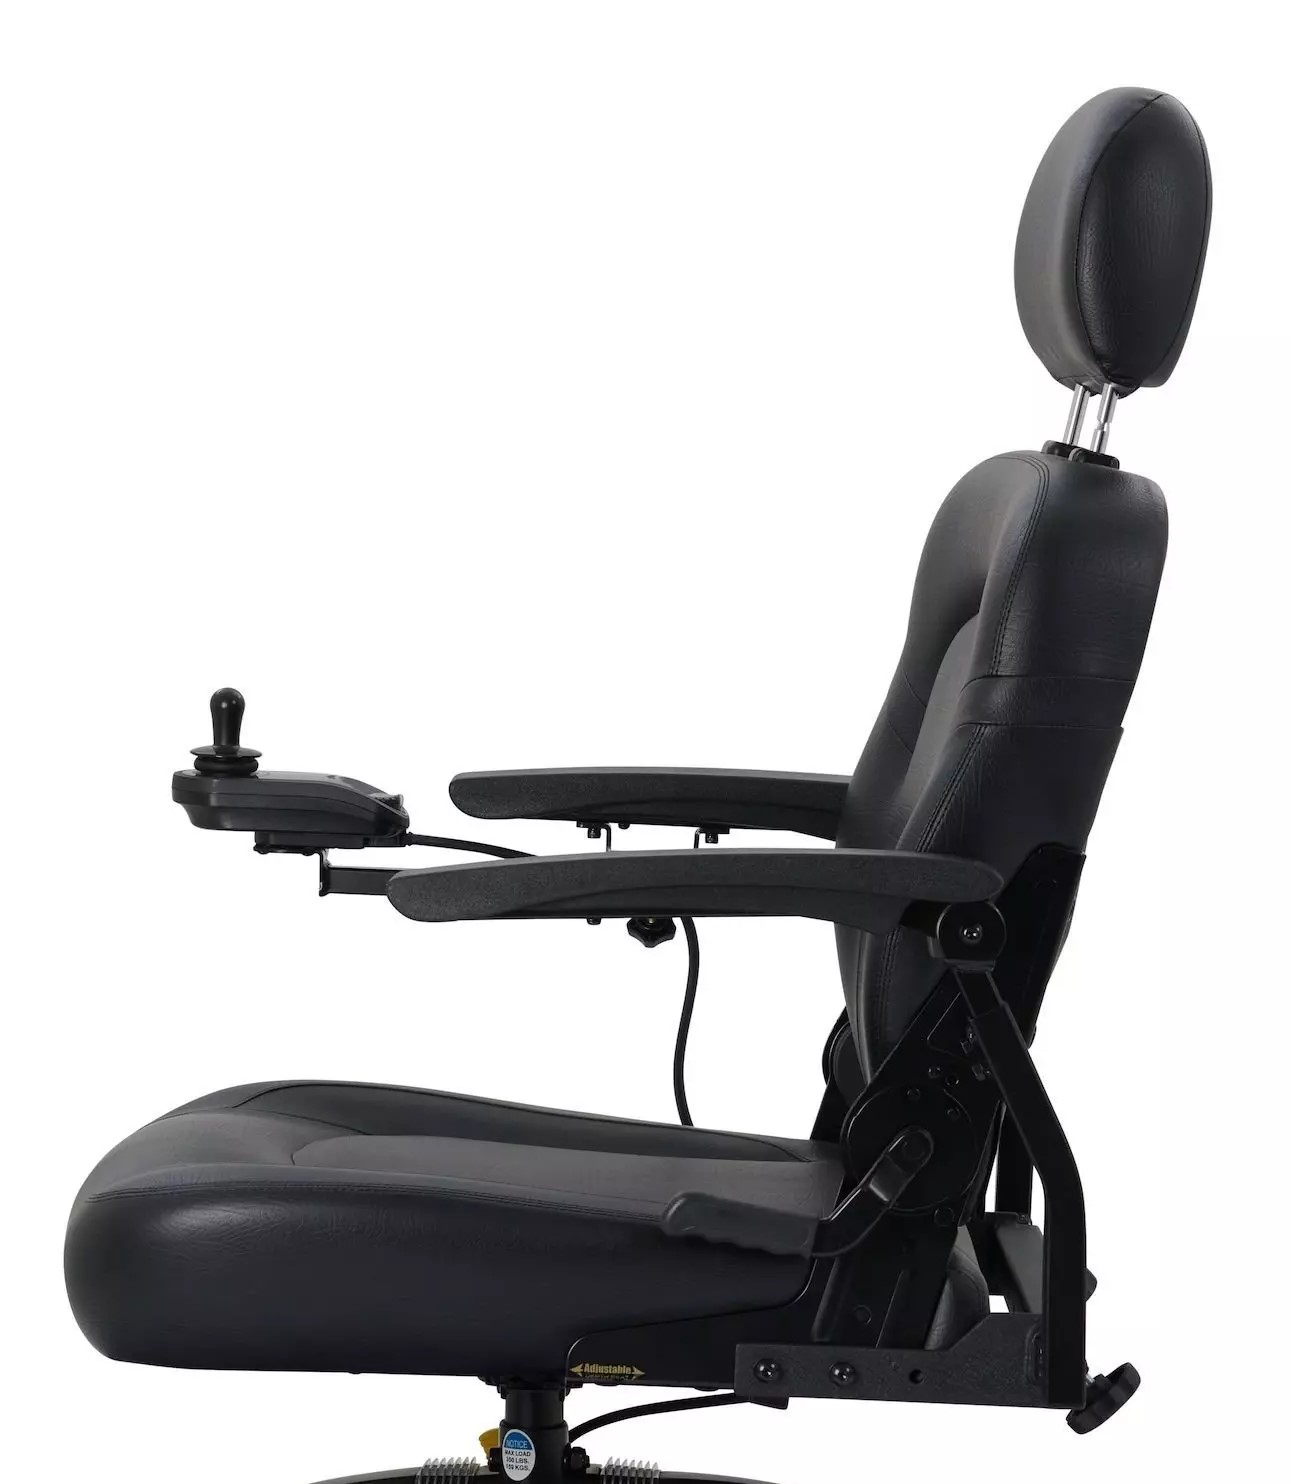 compass powerchair swivel seat